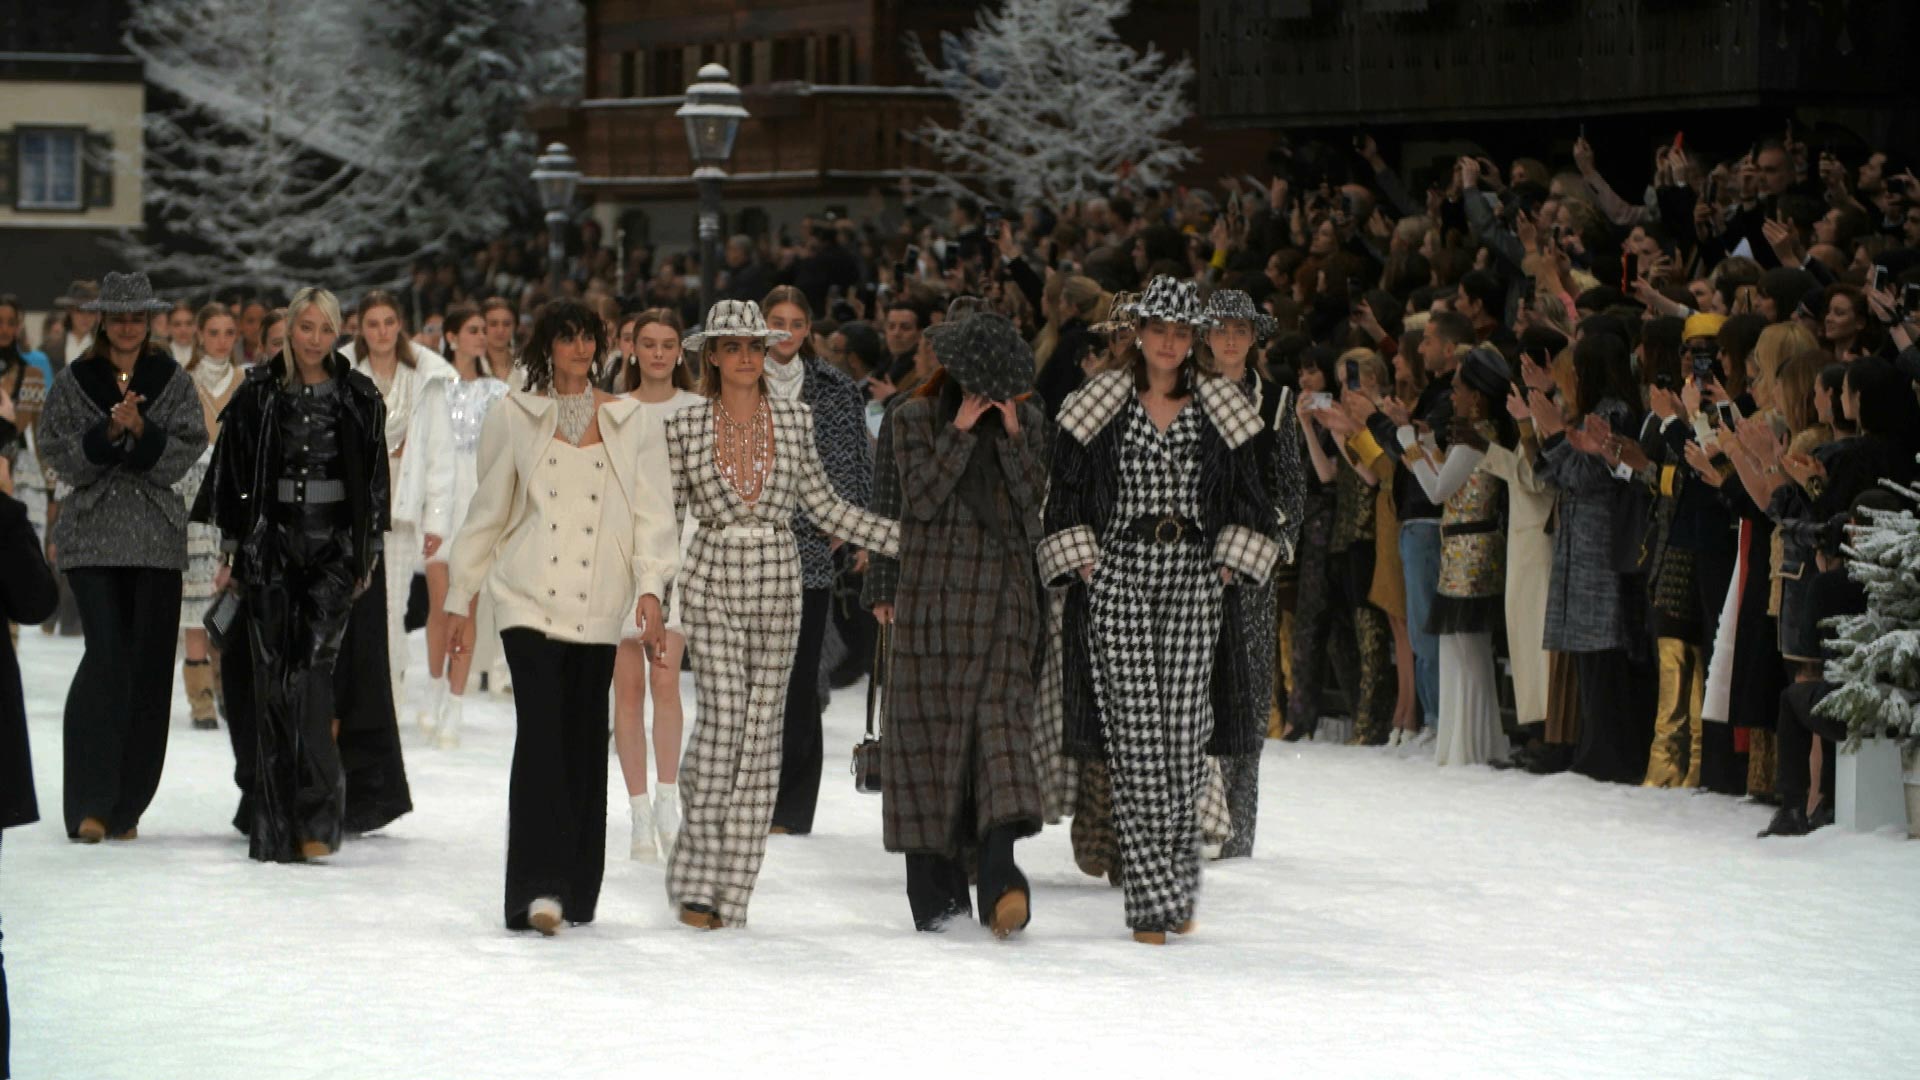 Paris Fashion Stories, Episode 5: RIP Karl Lagerfeld - Fashion